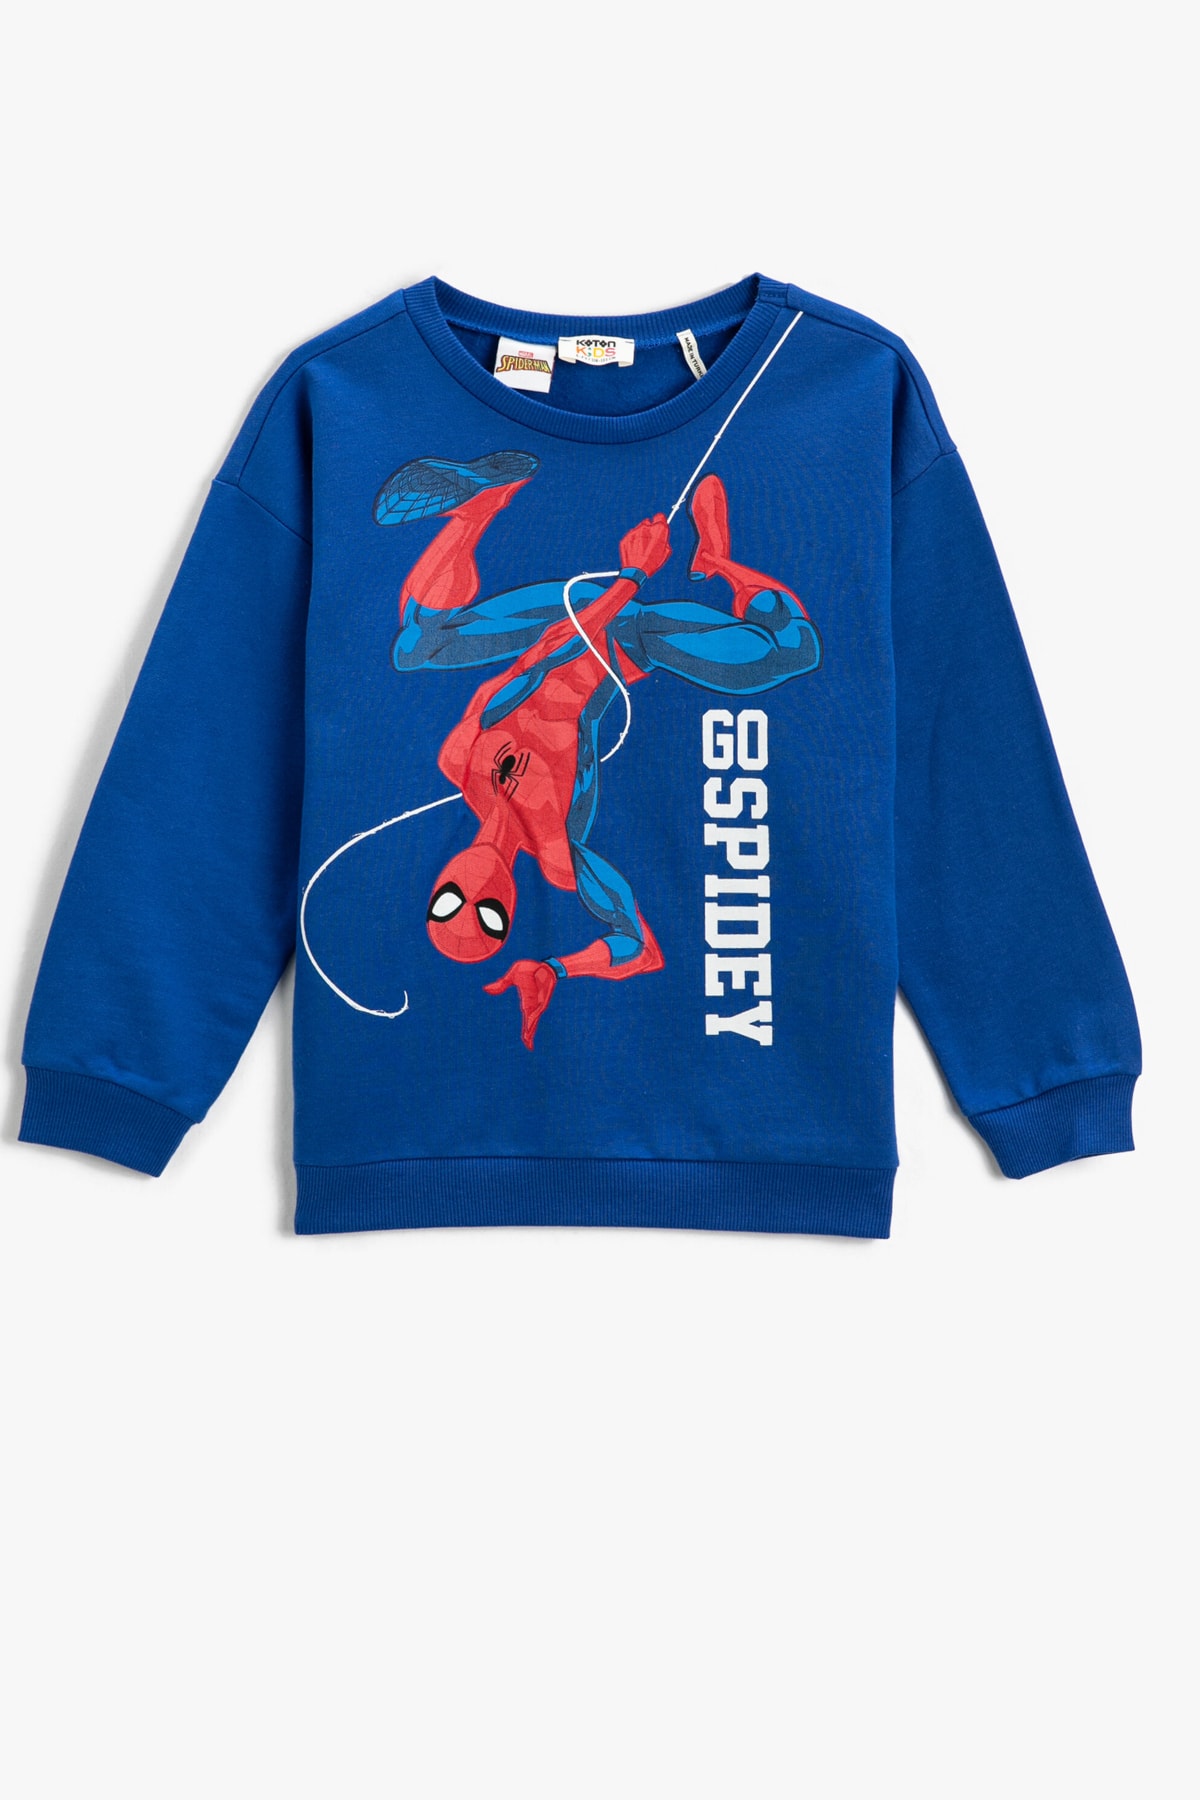 Koton Spiderman Sweatshirt Printed Licensed